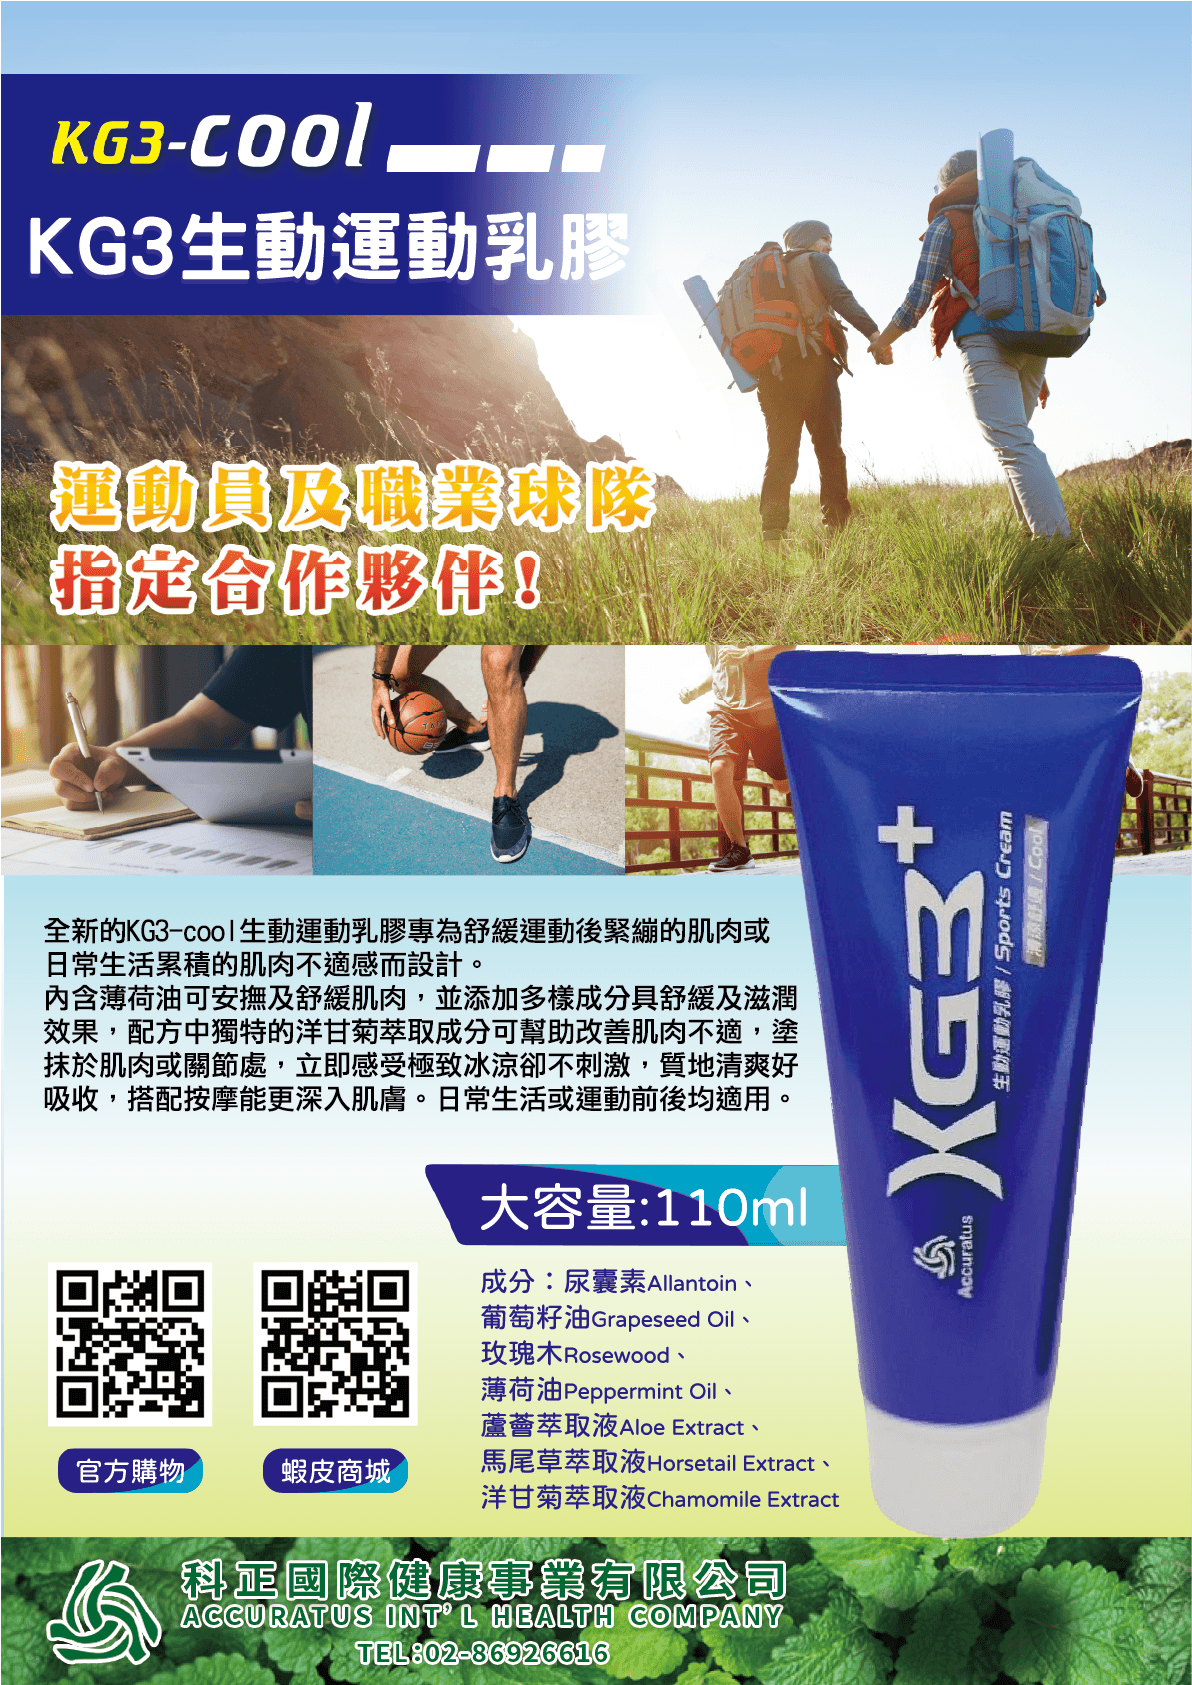 KG3-cool生動運動乳膠 1